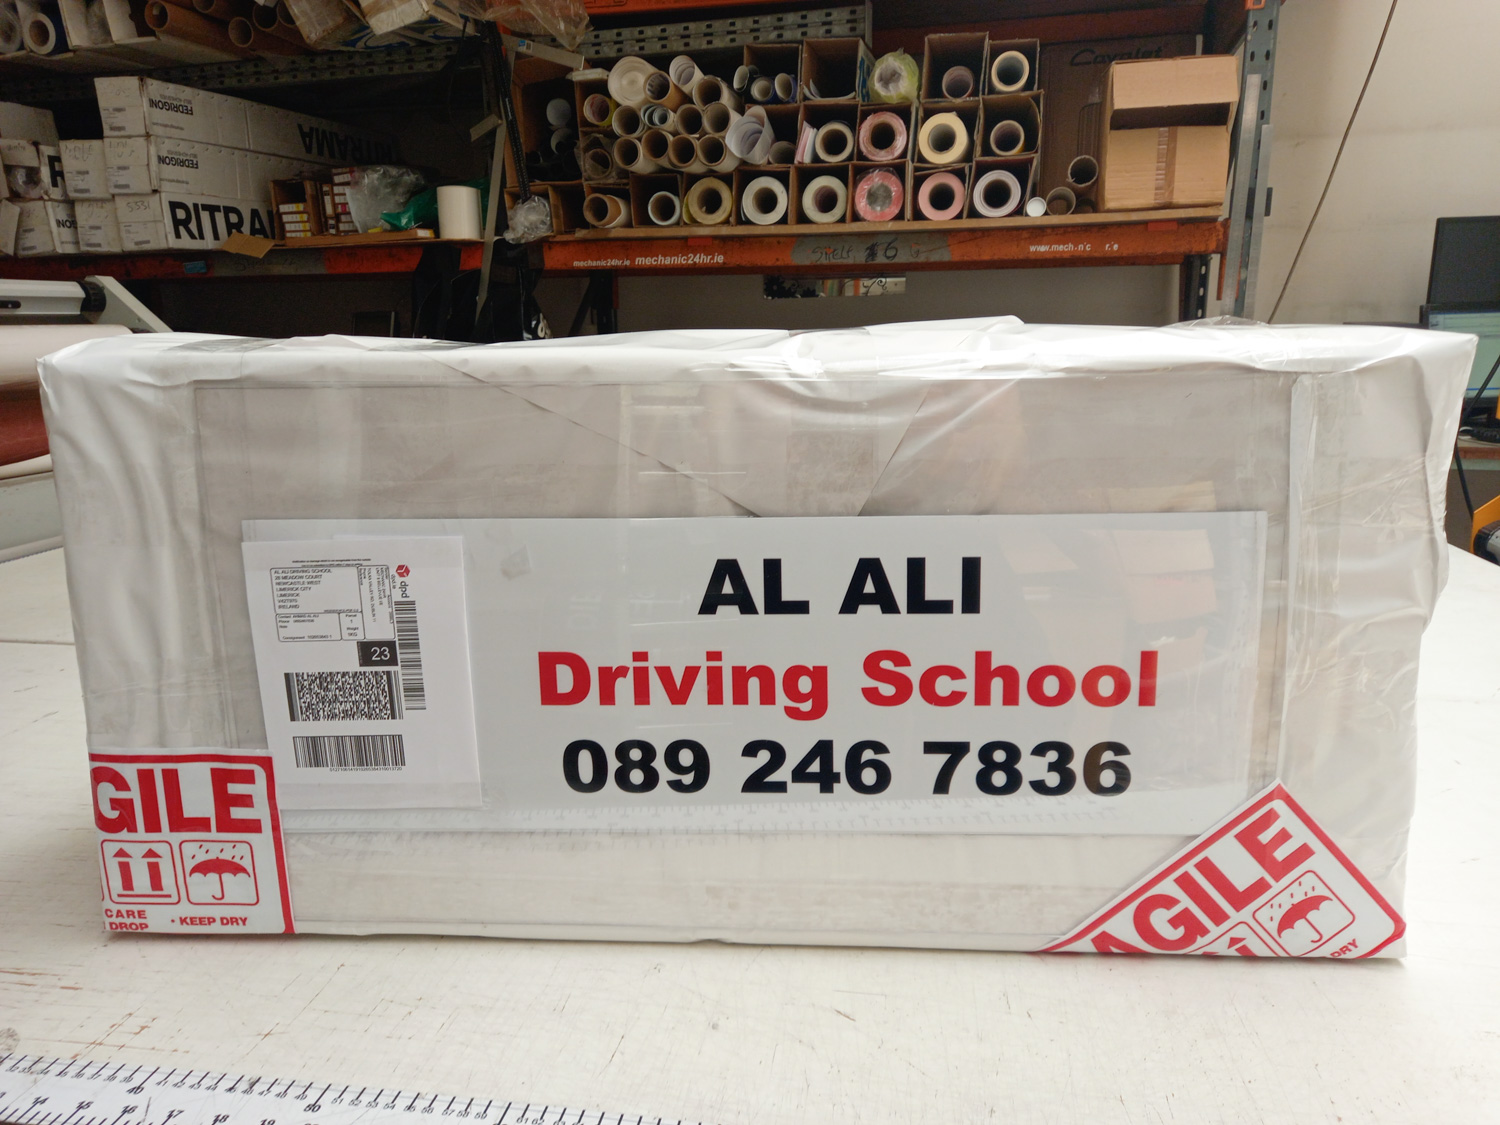 al ali driving school roofsign